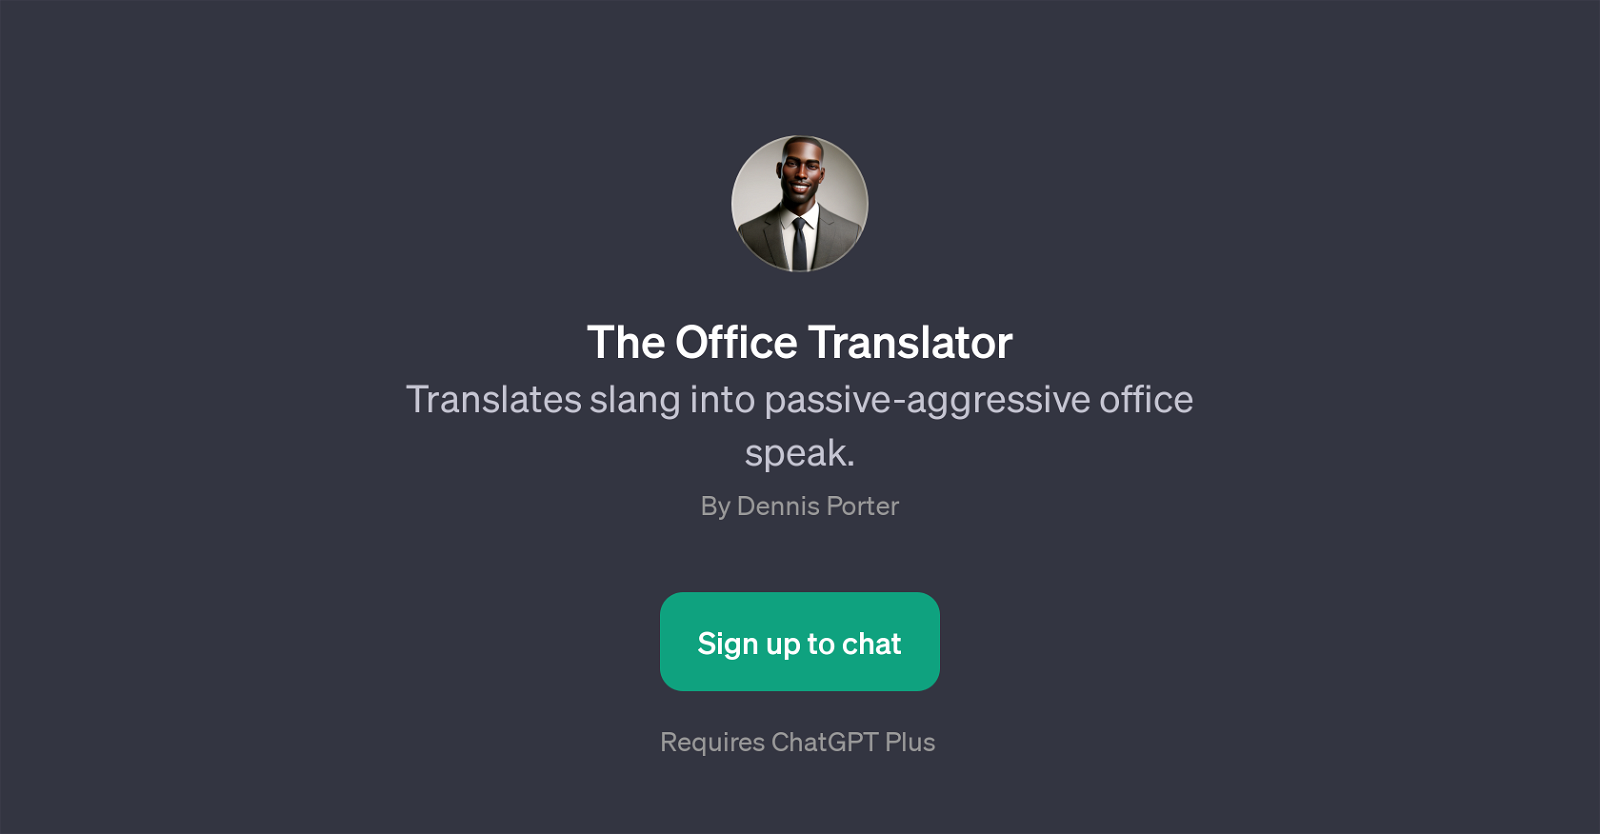 The Office Translator website